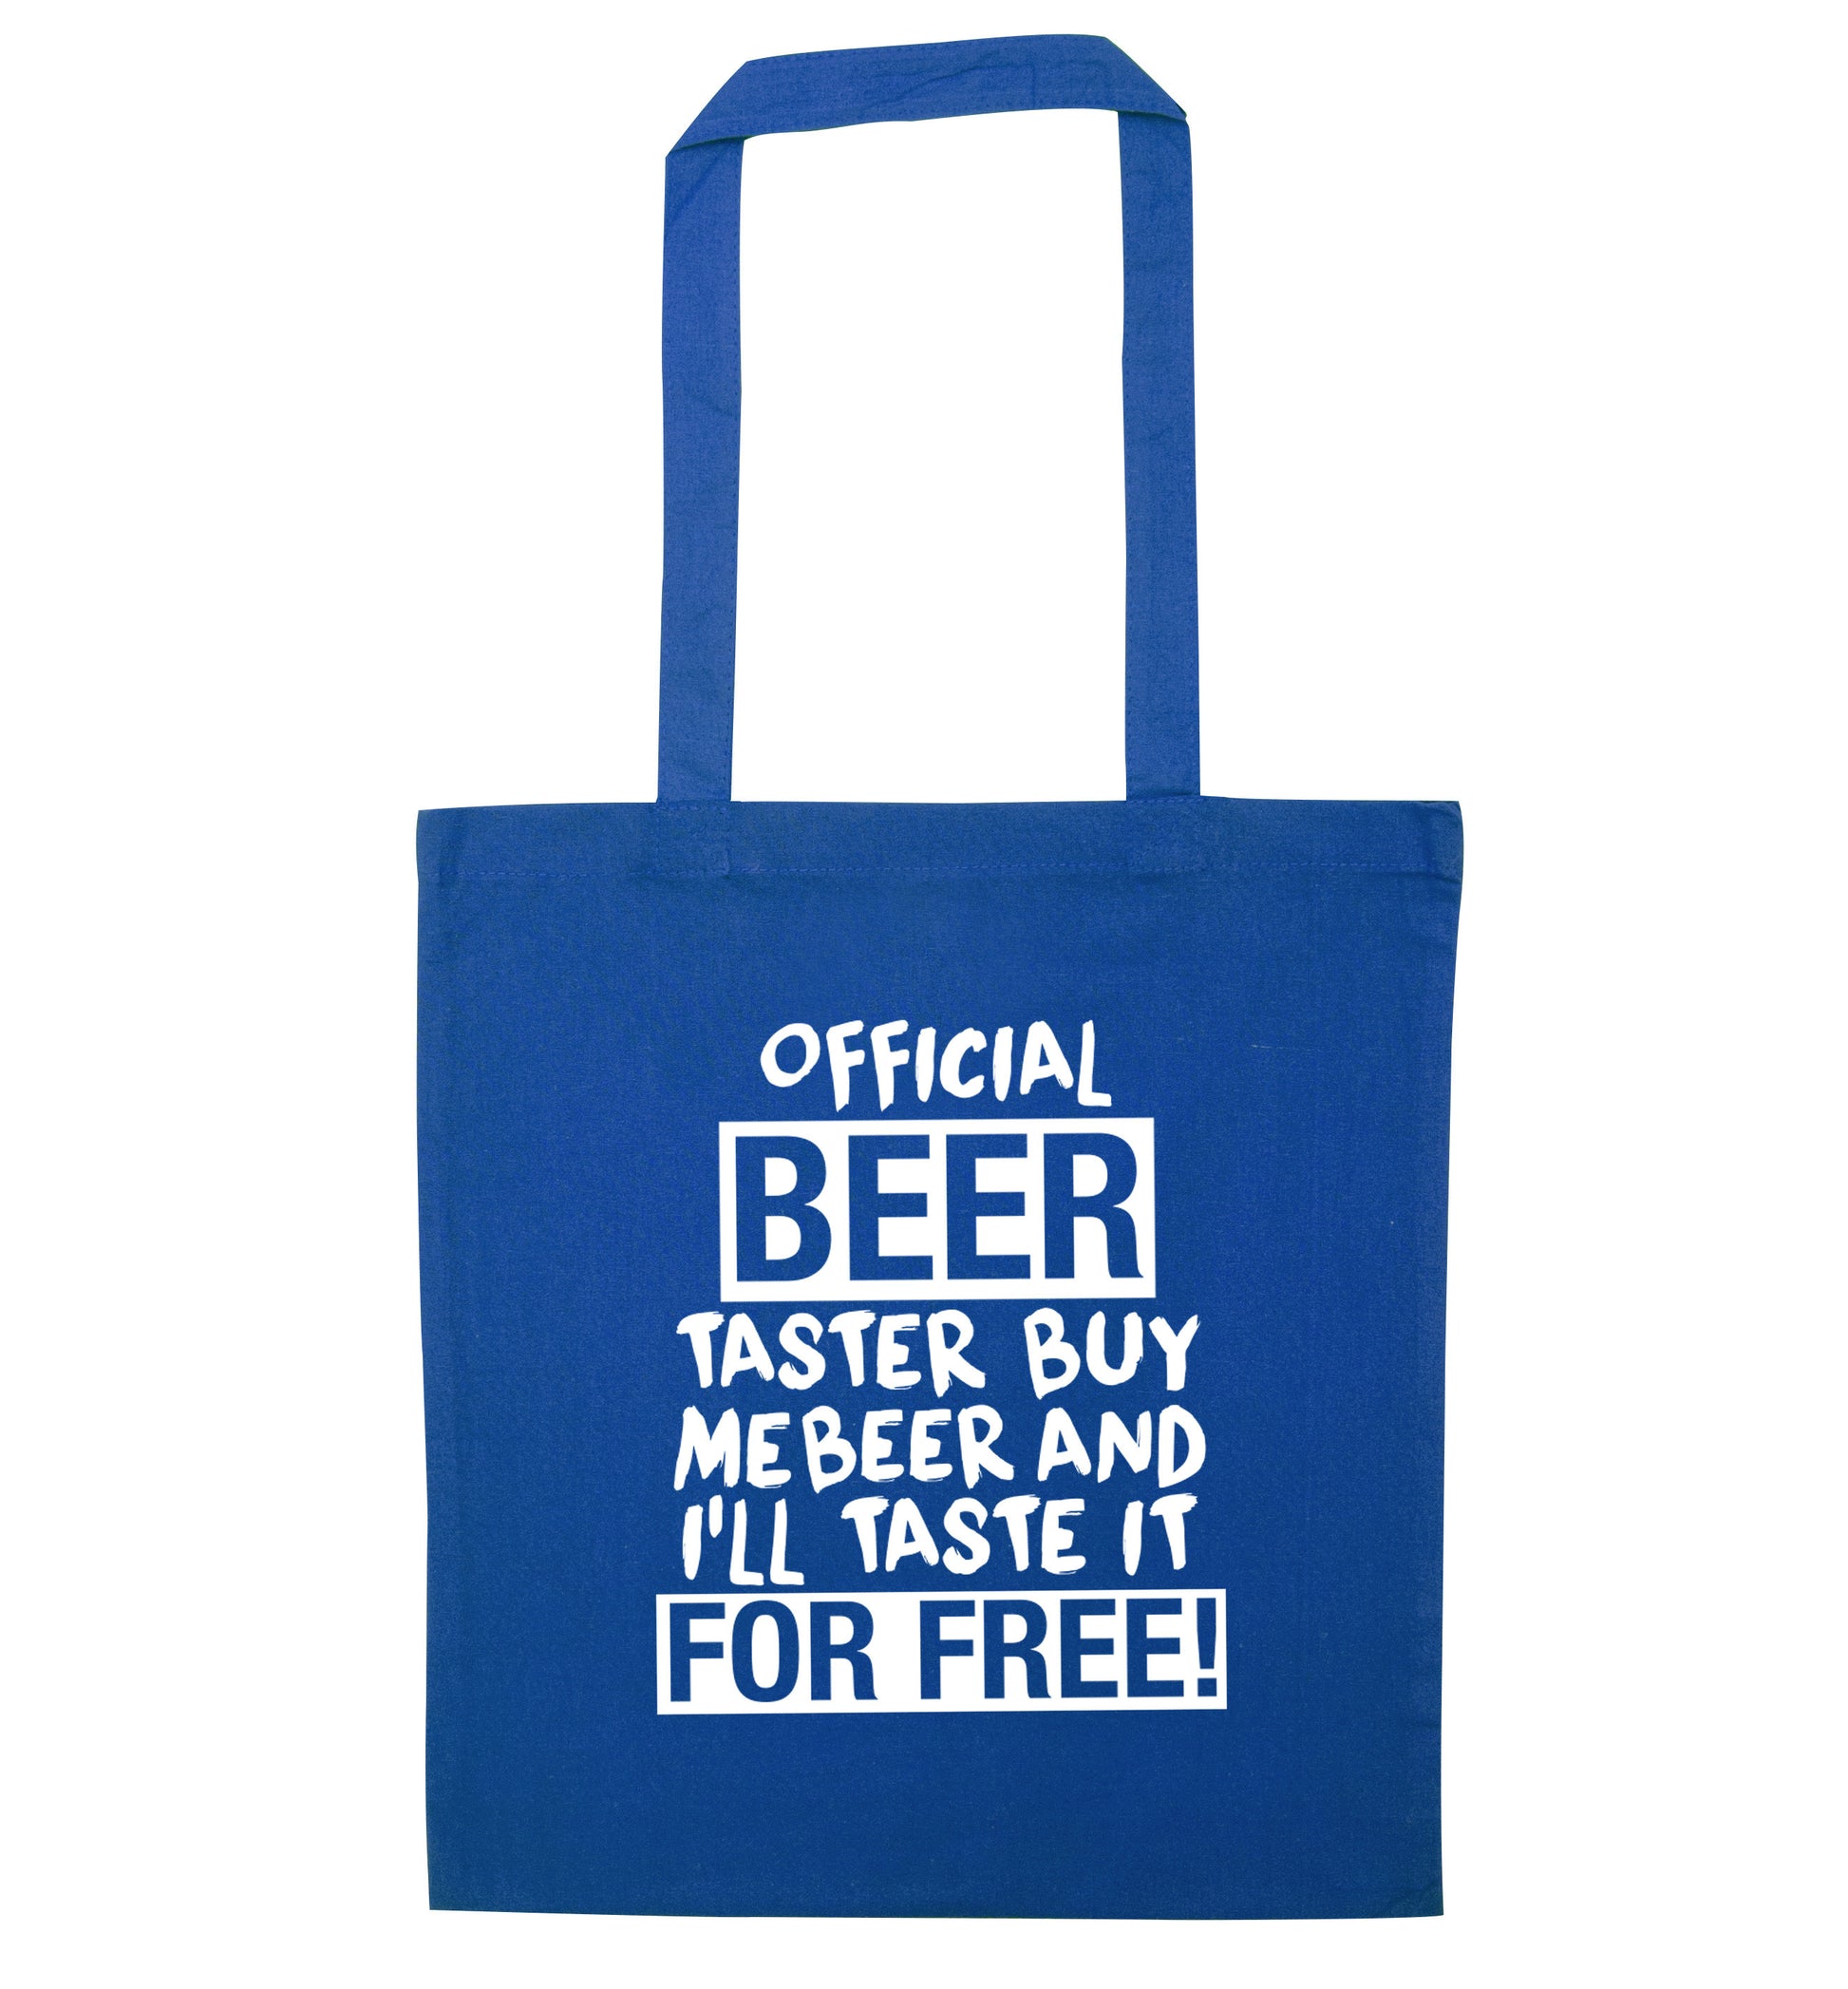 Official beer taster buy me beer and I'll taste it for free! blue tote bag